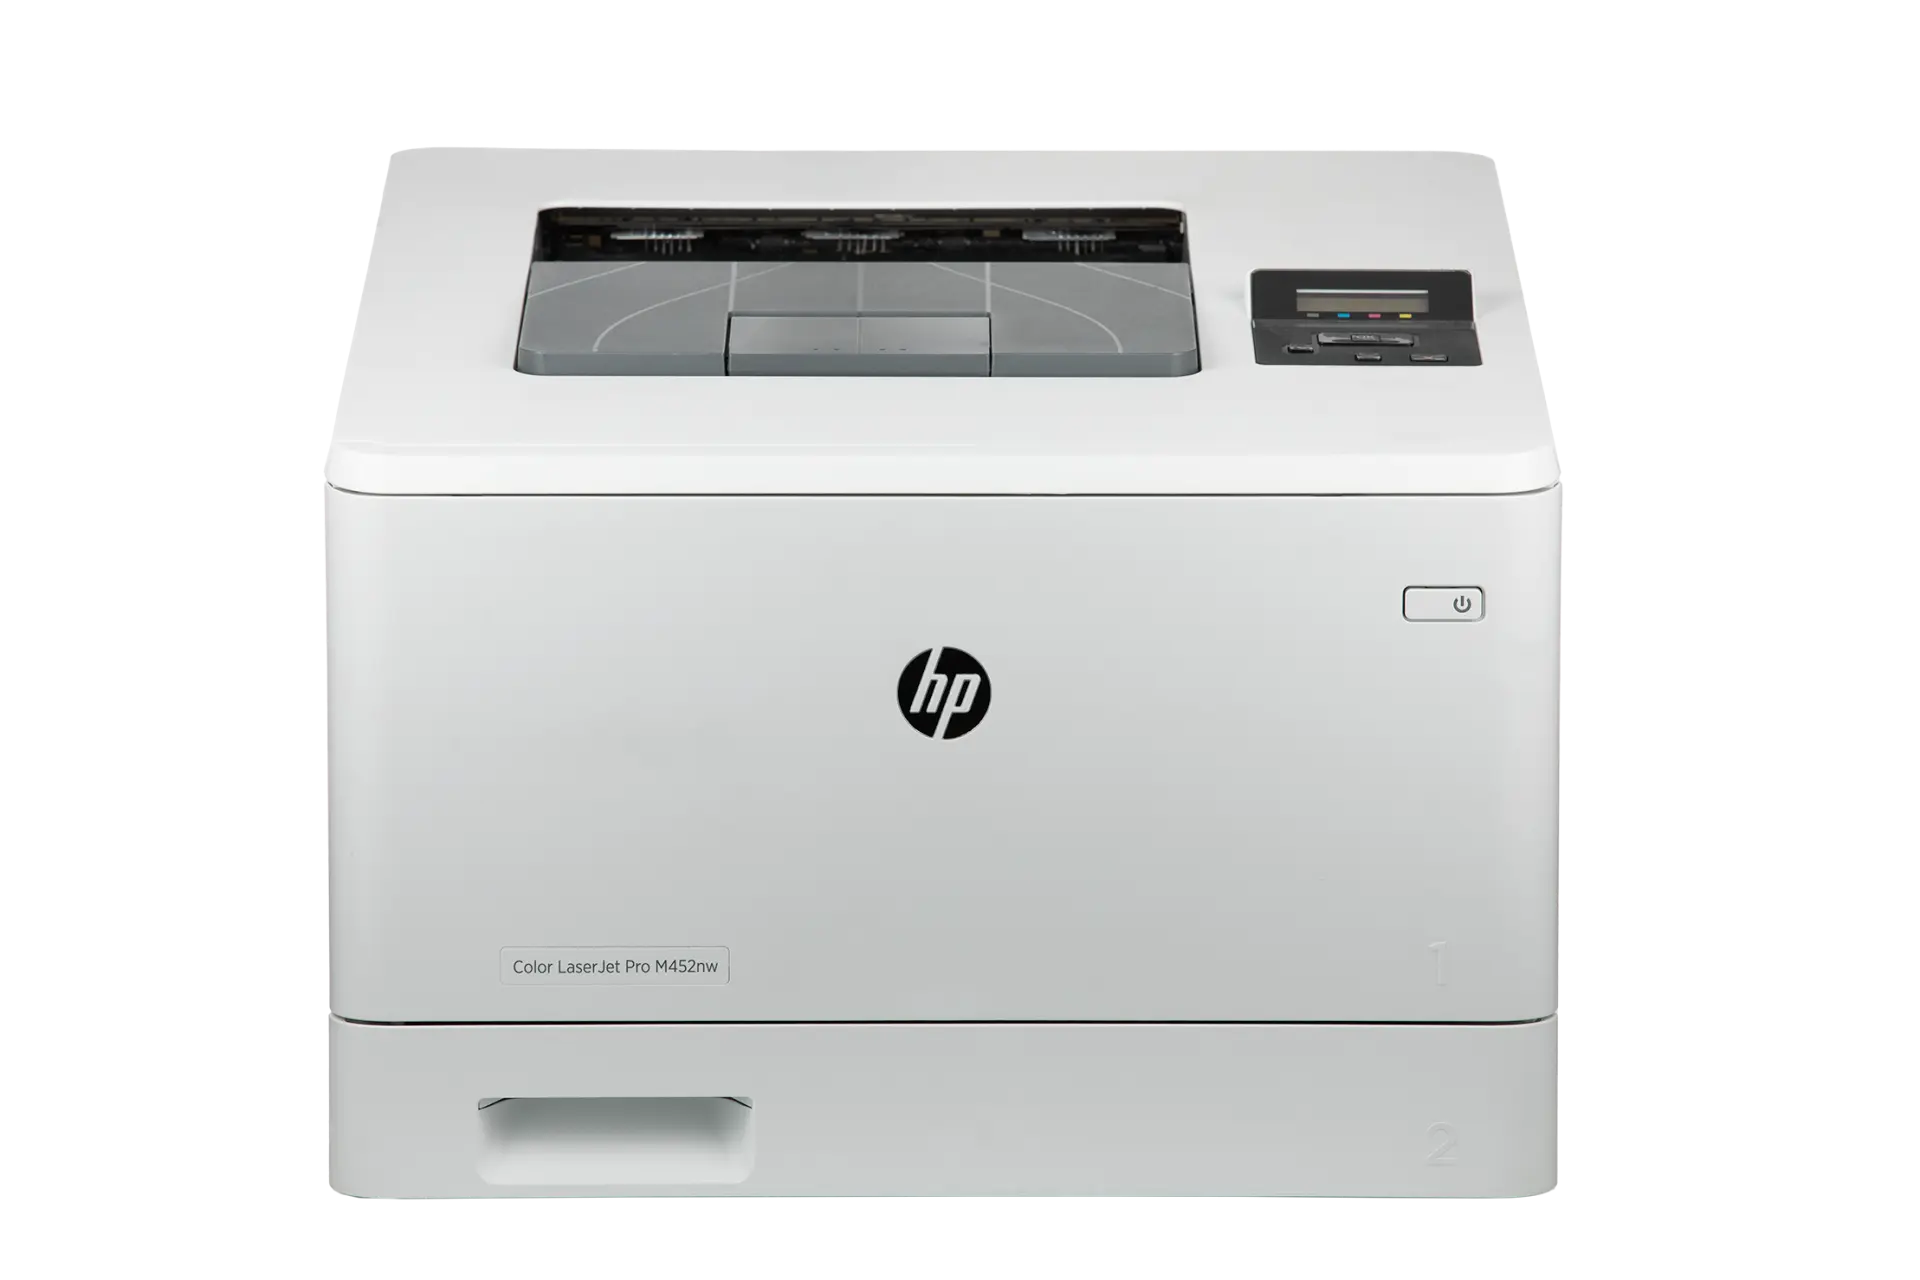 hewlett packard m452nw - What is error 59 F0 on HP Color LaserJet Pro m452nw